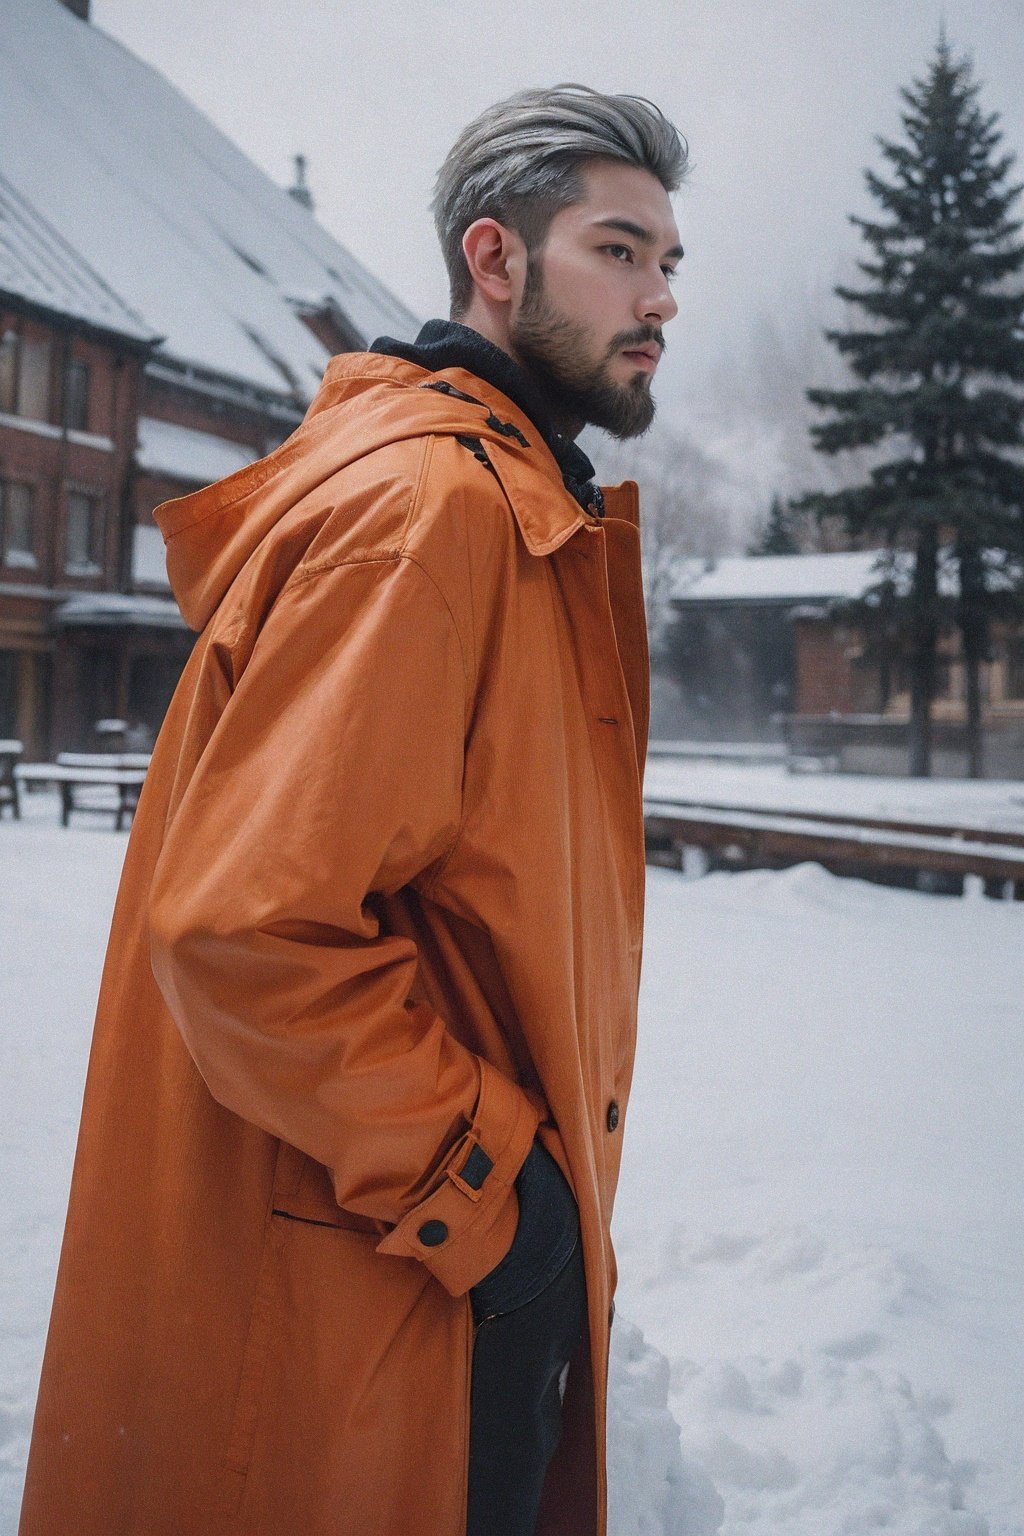 (silver_hair:1.1),handsome male,beard,(oversized orange coat:1.1),abs,winter,snow,